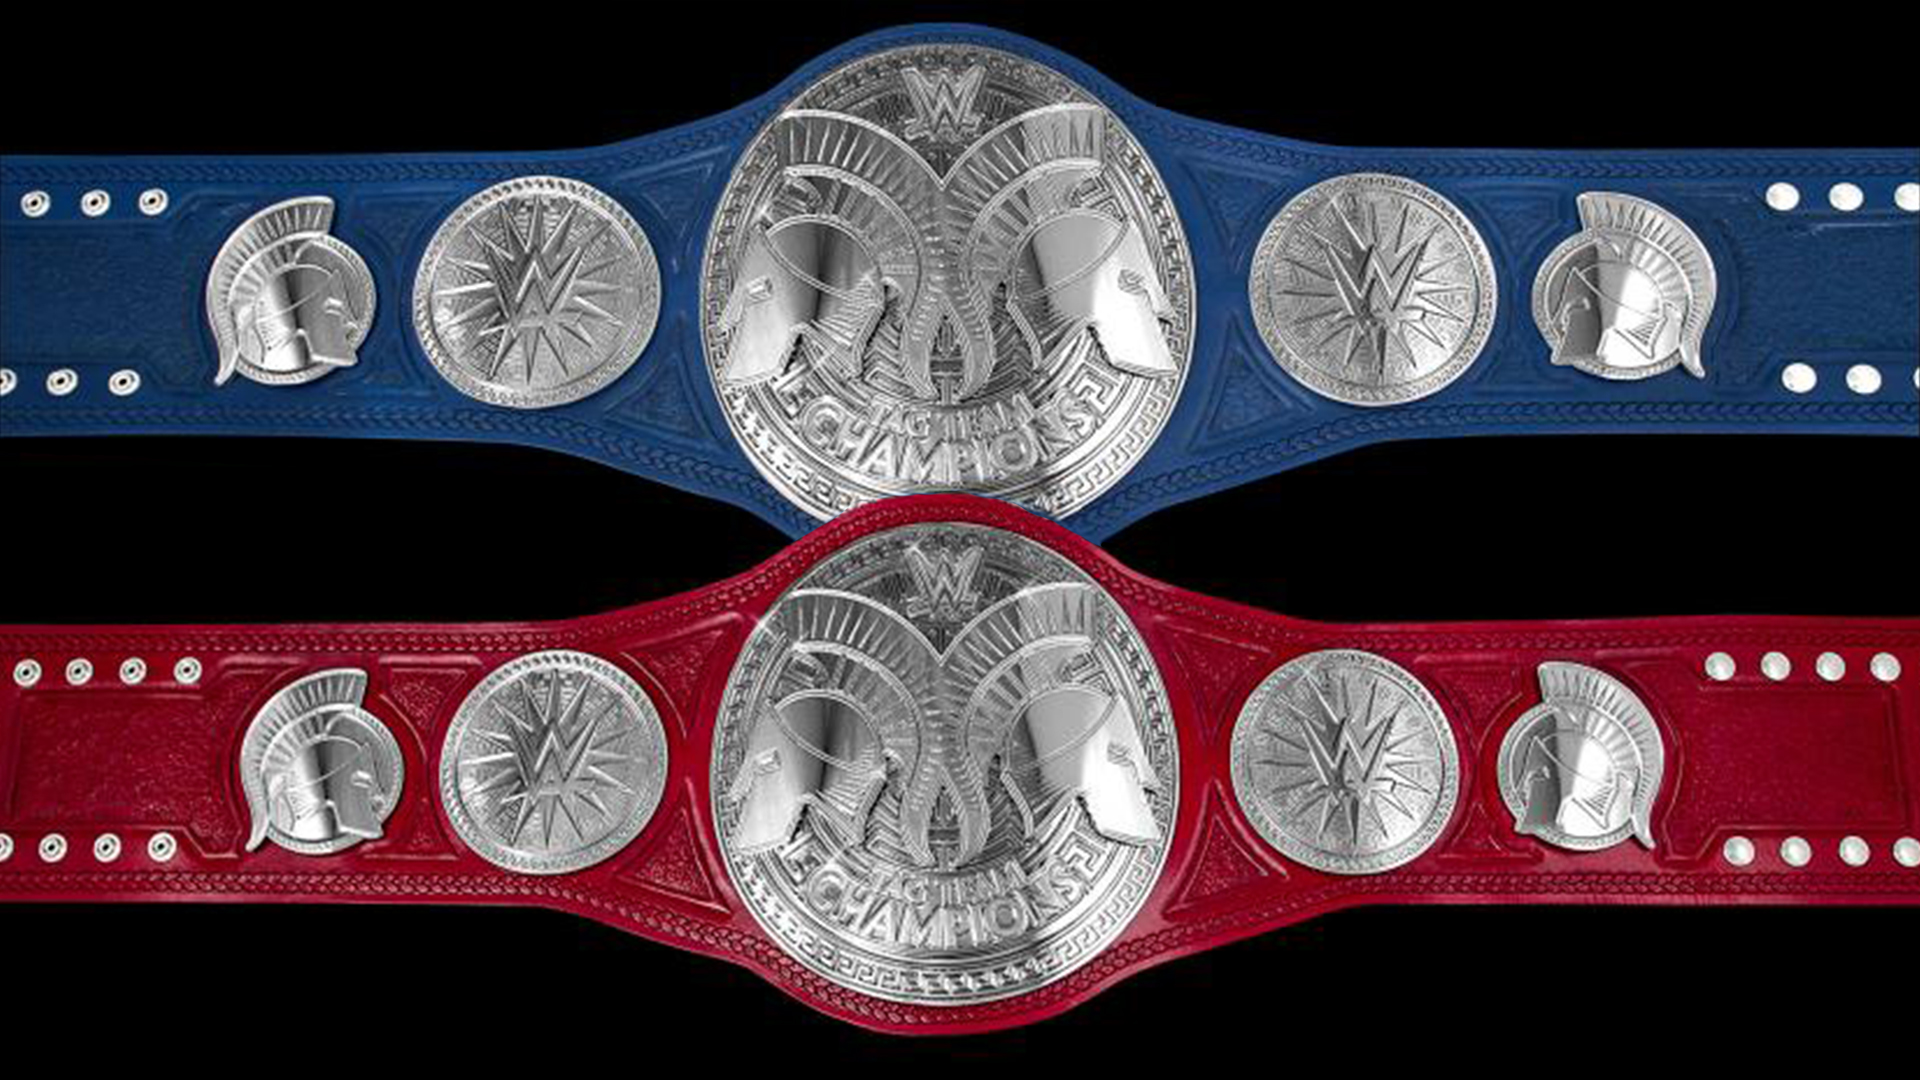 new wwe championship belt design